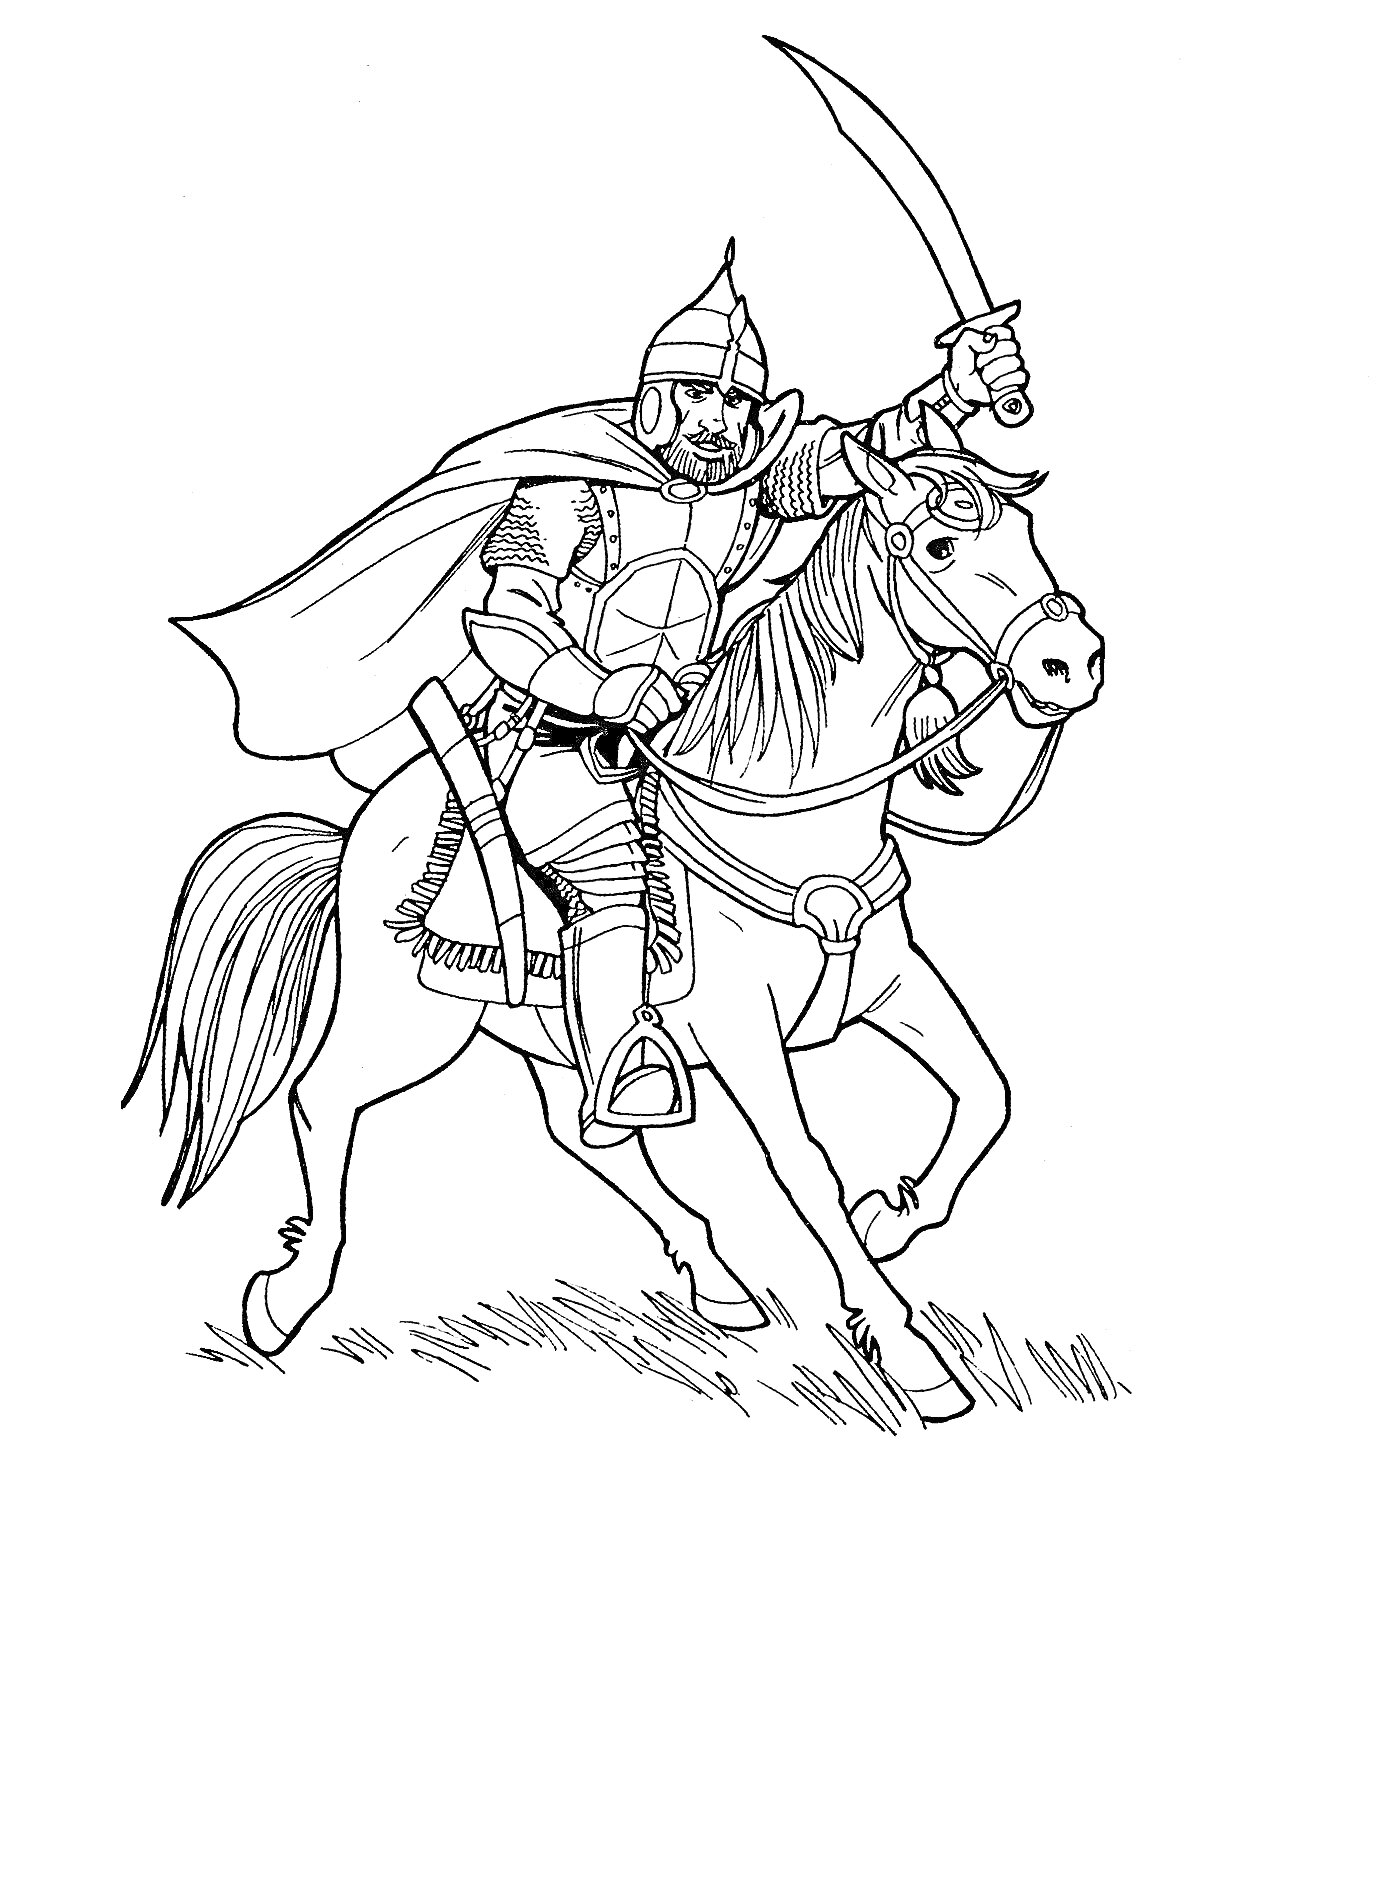 Раскраска Богатырь на коне с поднятым мечом